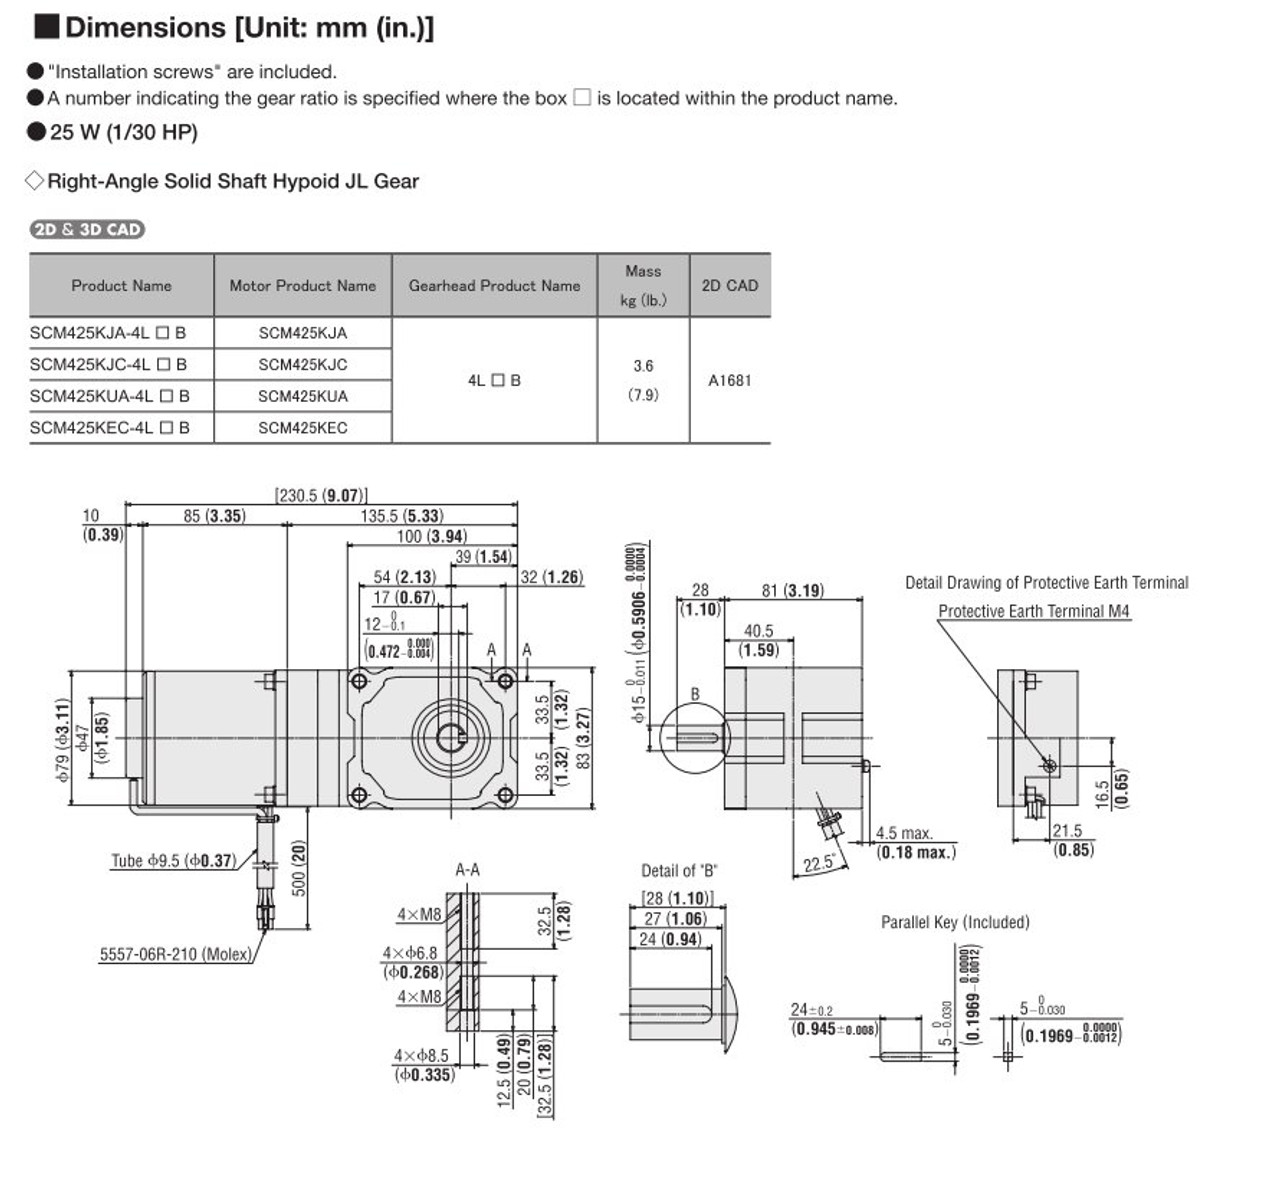 SCM425KUA-4L100B - Dimensions